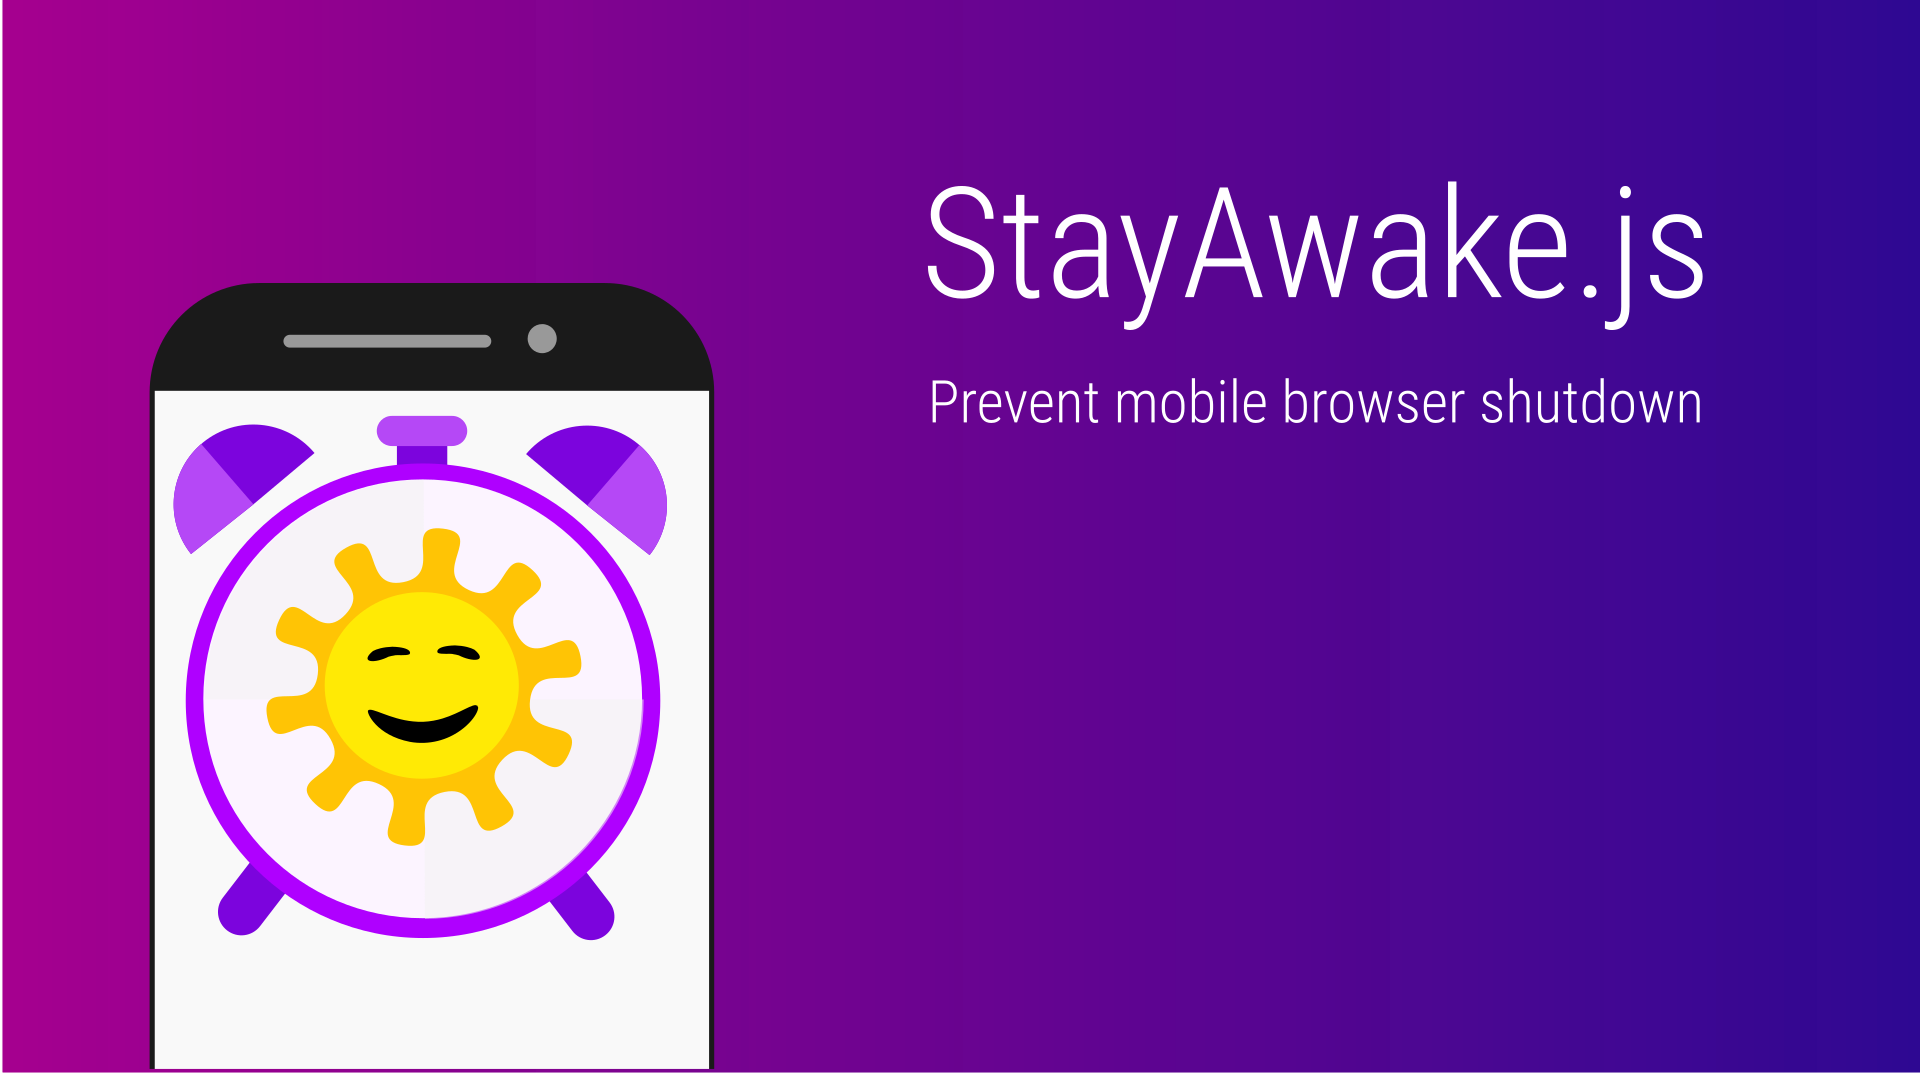 StayAwake.js